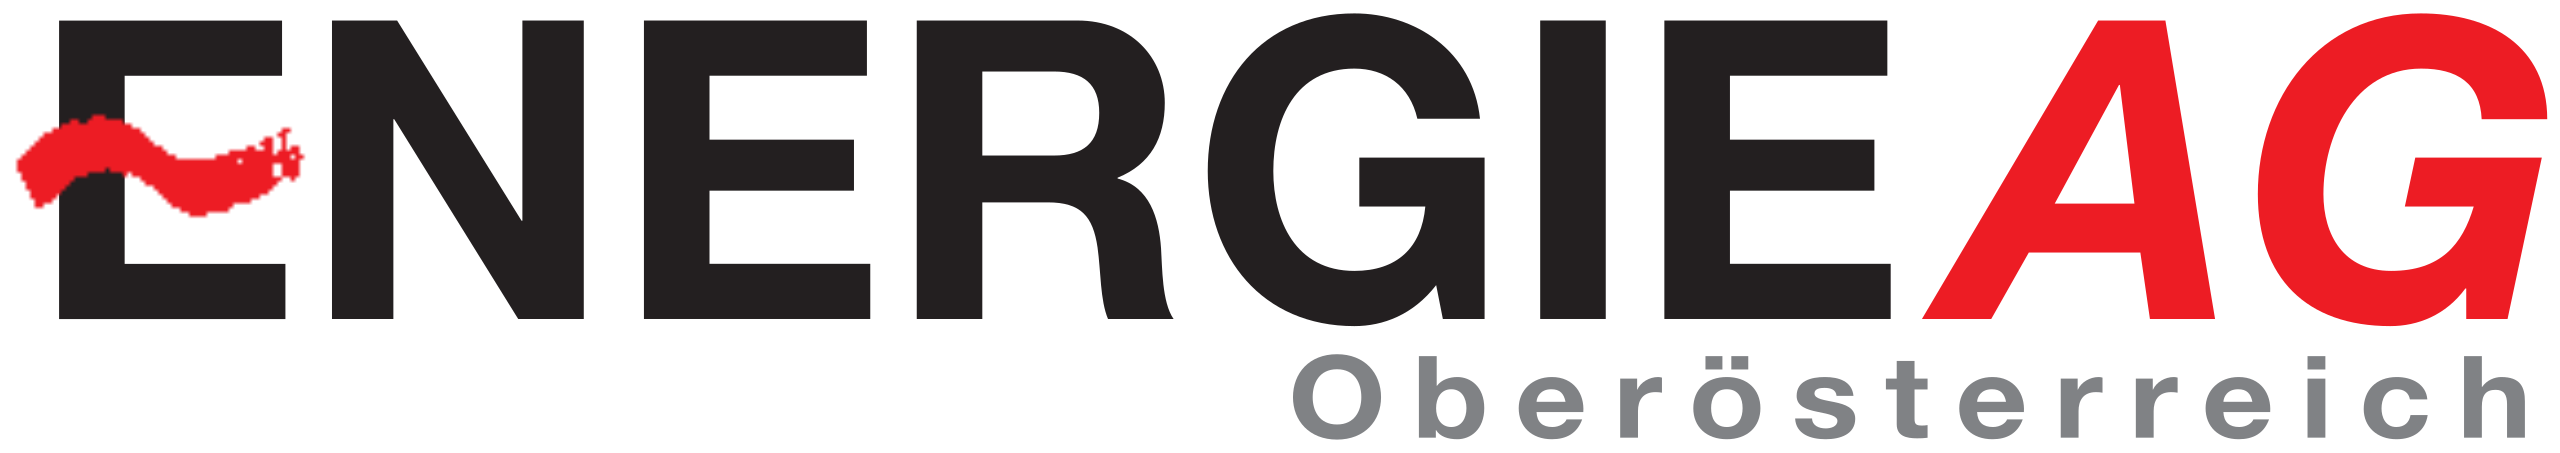 Energie AG Logo Oberösterreich